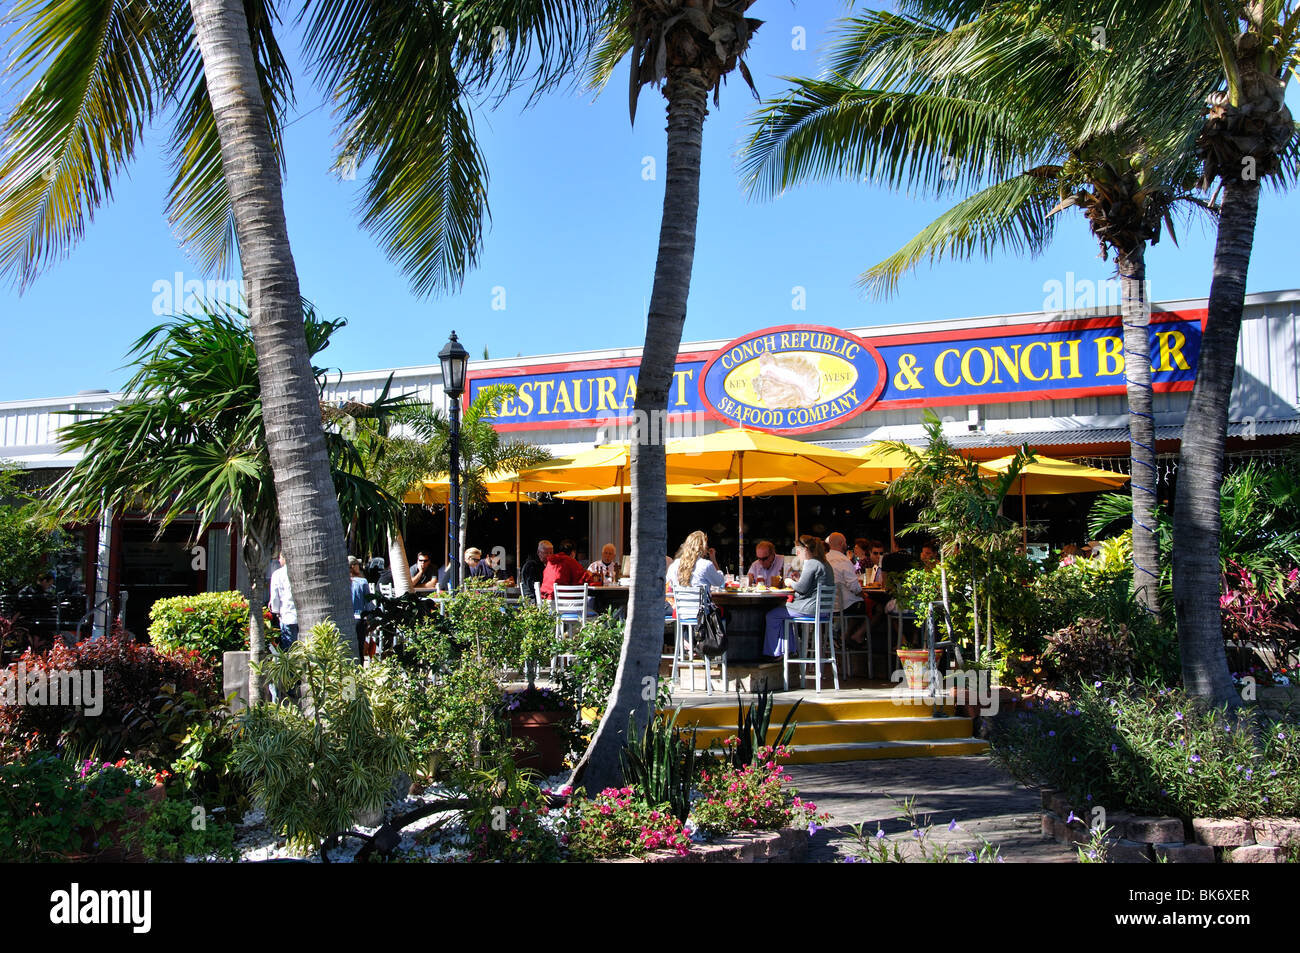 Restaurant & Conch Bar, Key West, Florida, USA Stock Photo, Royalty